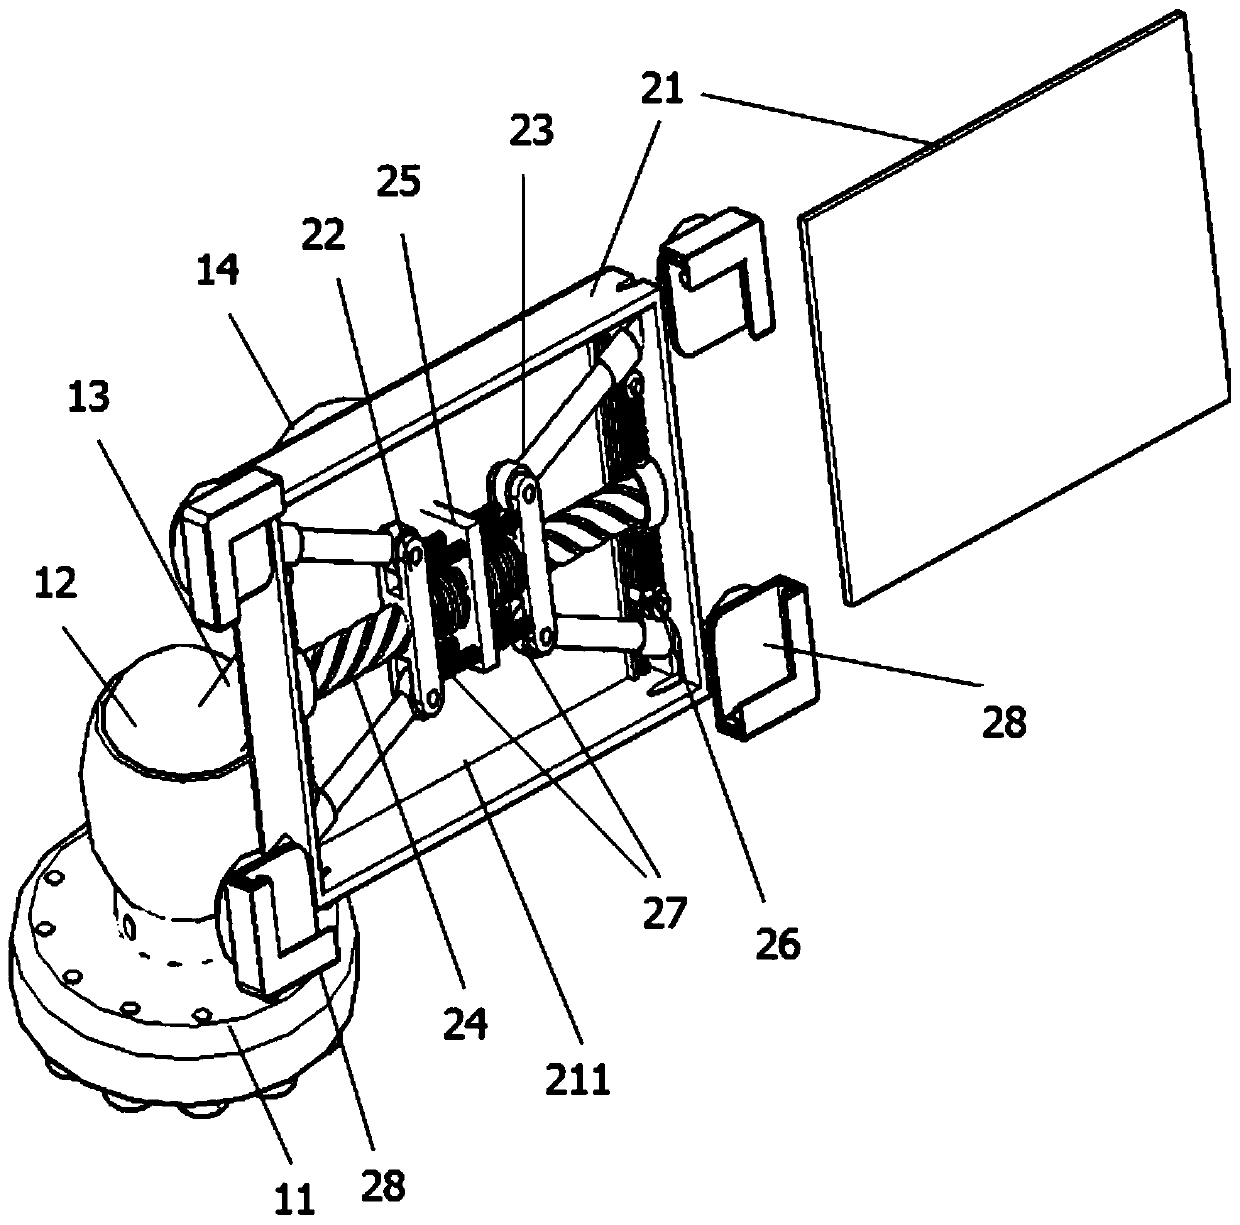 Four-corner locking vehicle-mounted mobile phone holder